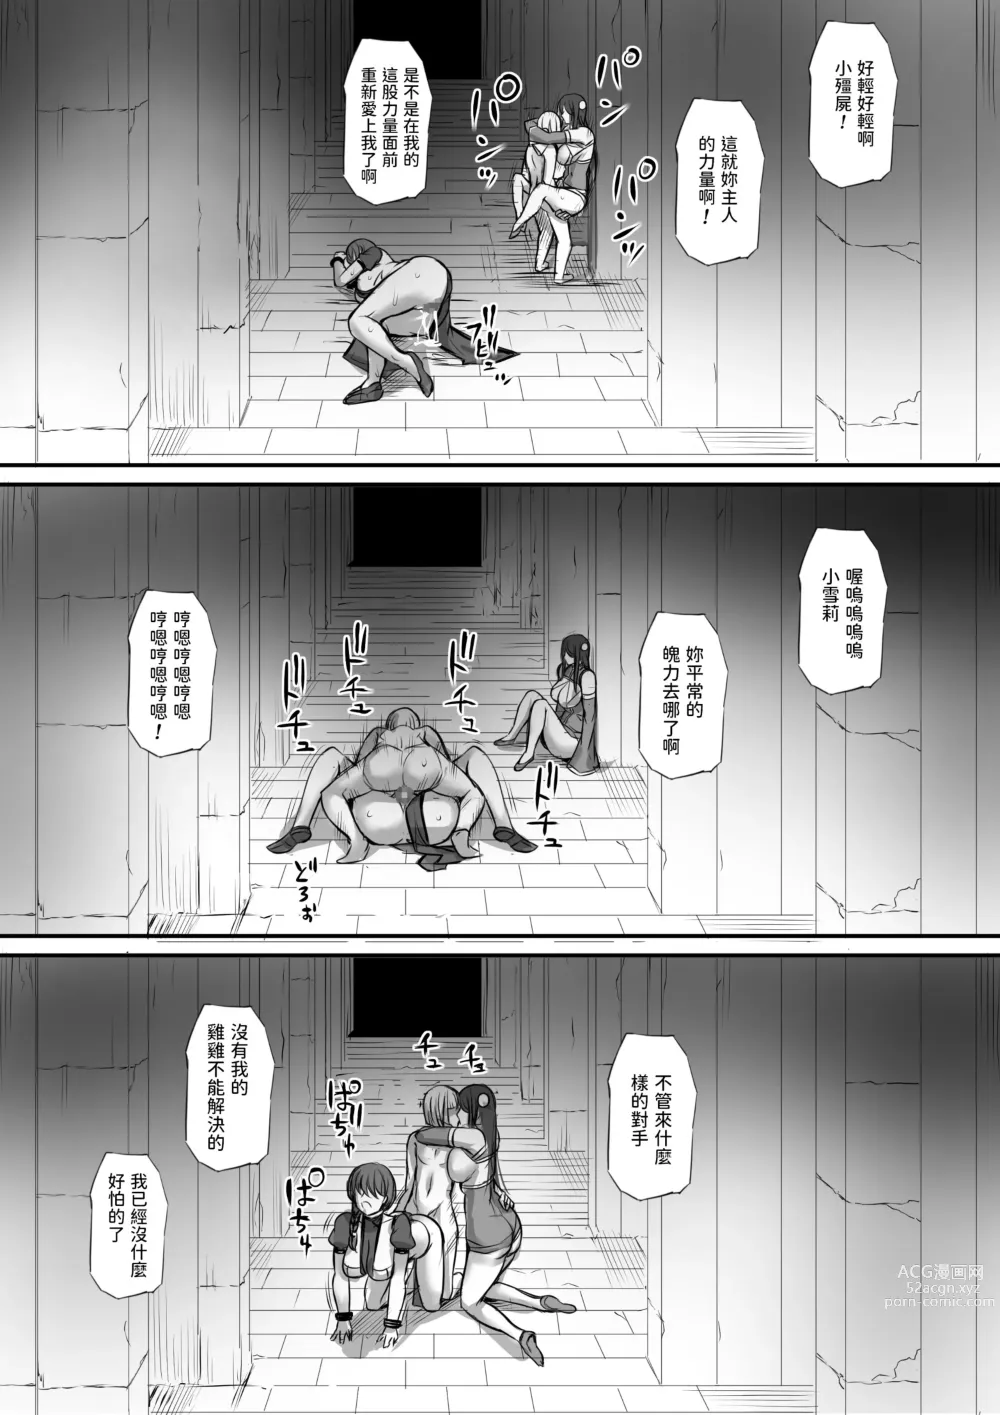 Page 40 of doujinshi 迷宮で死体を拾ってキョンシーにしてみた話2